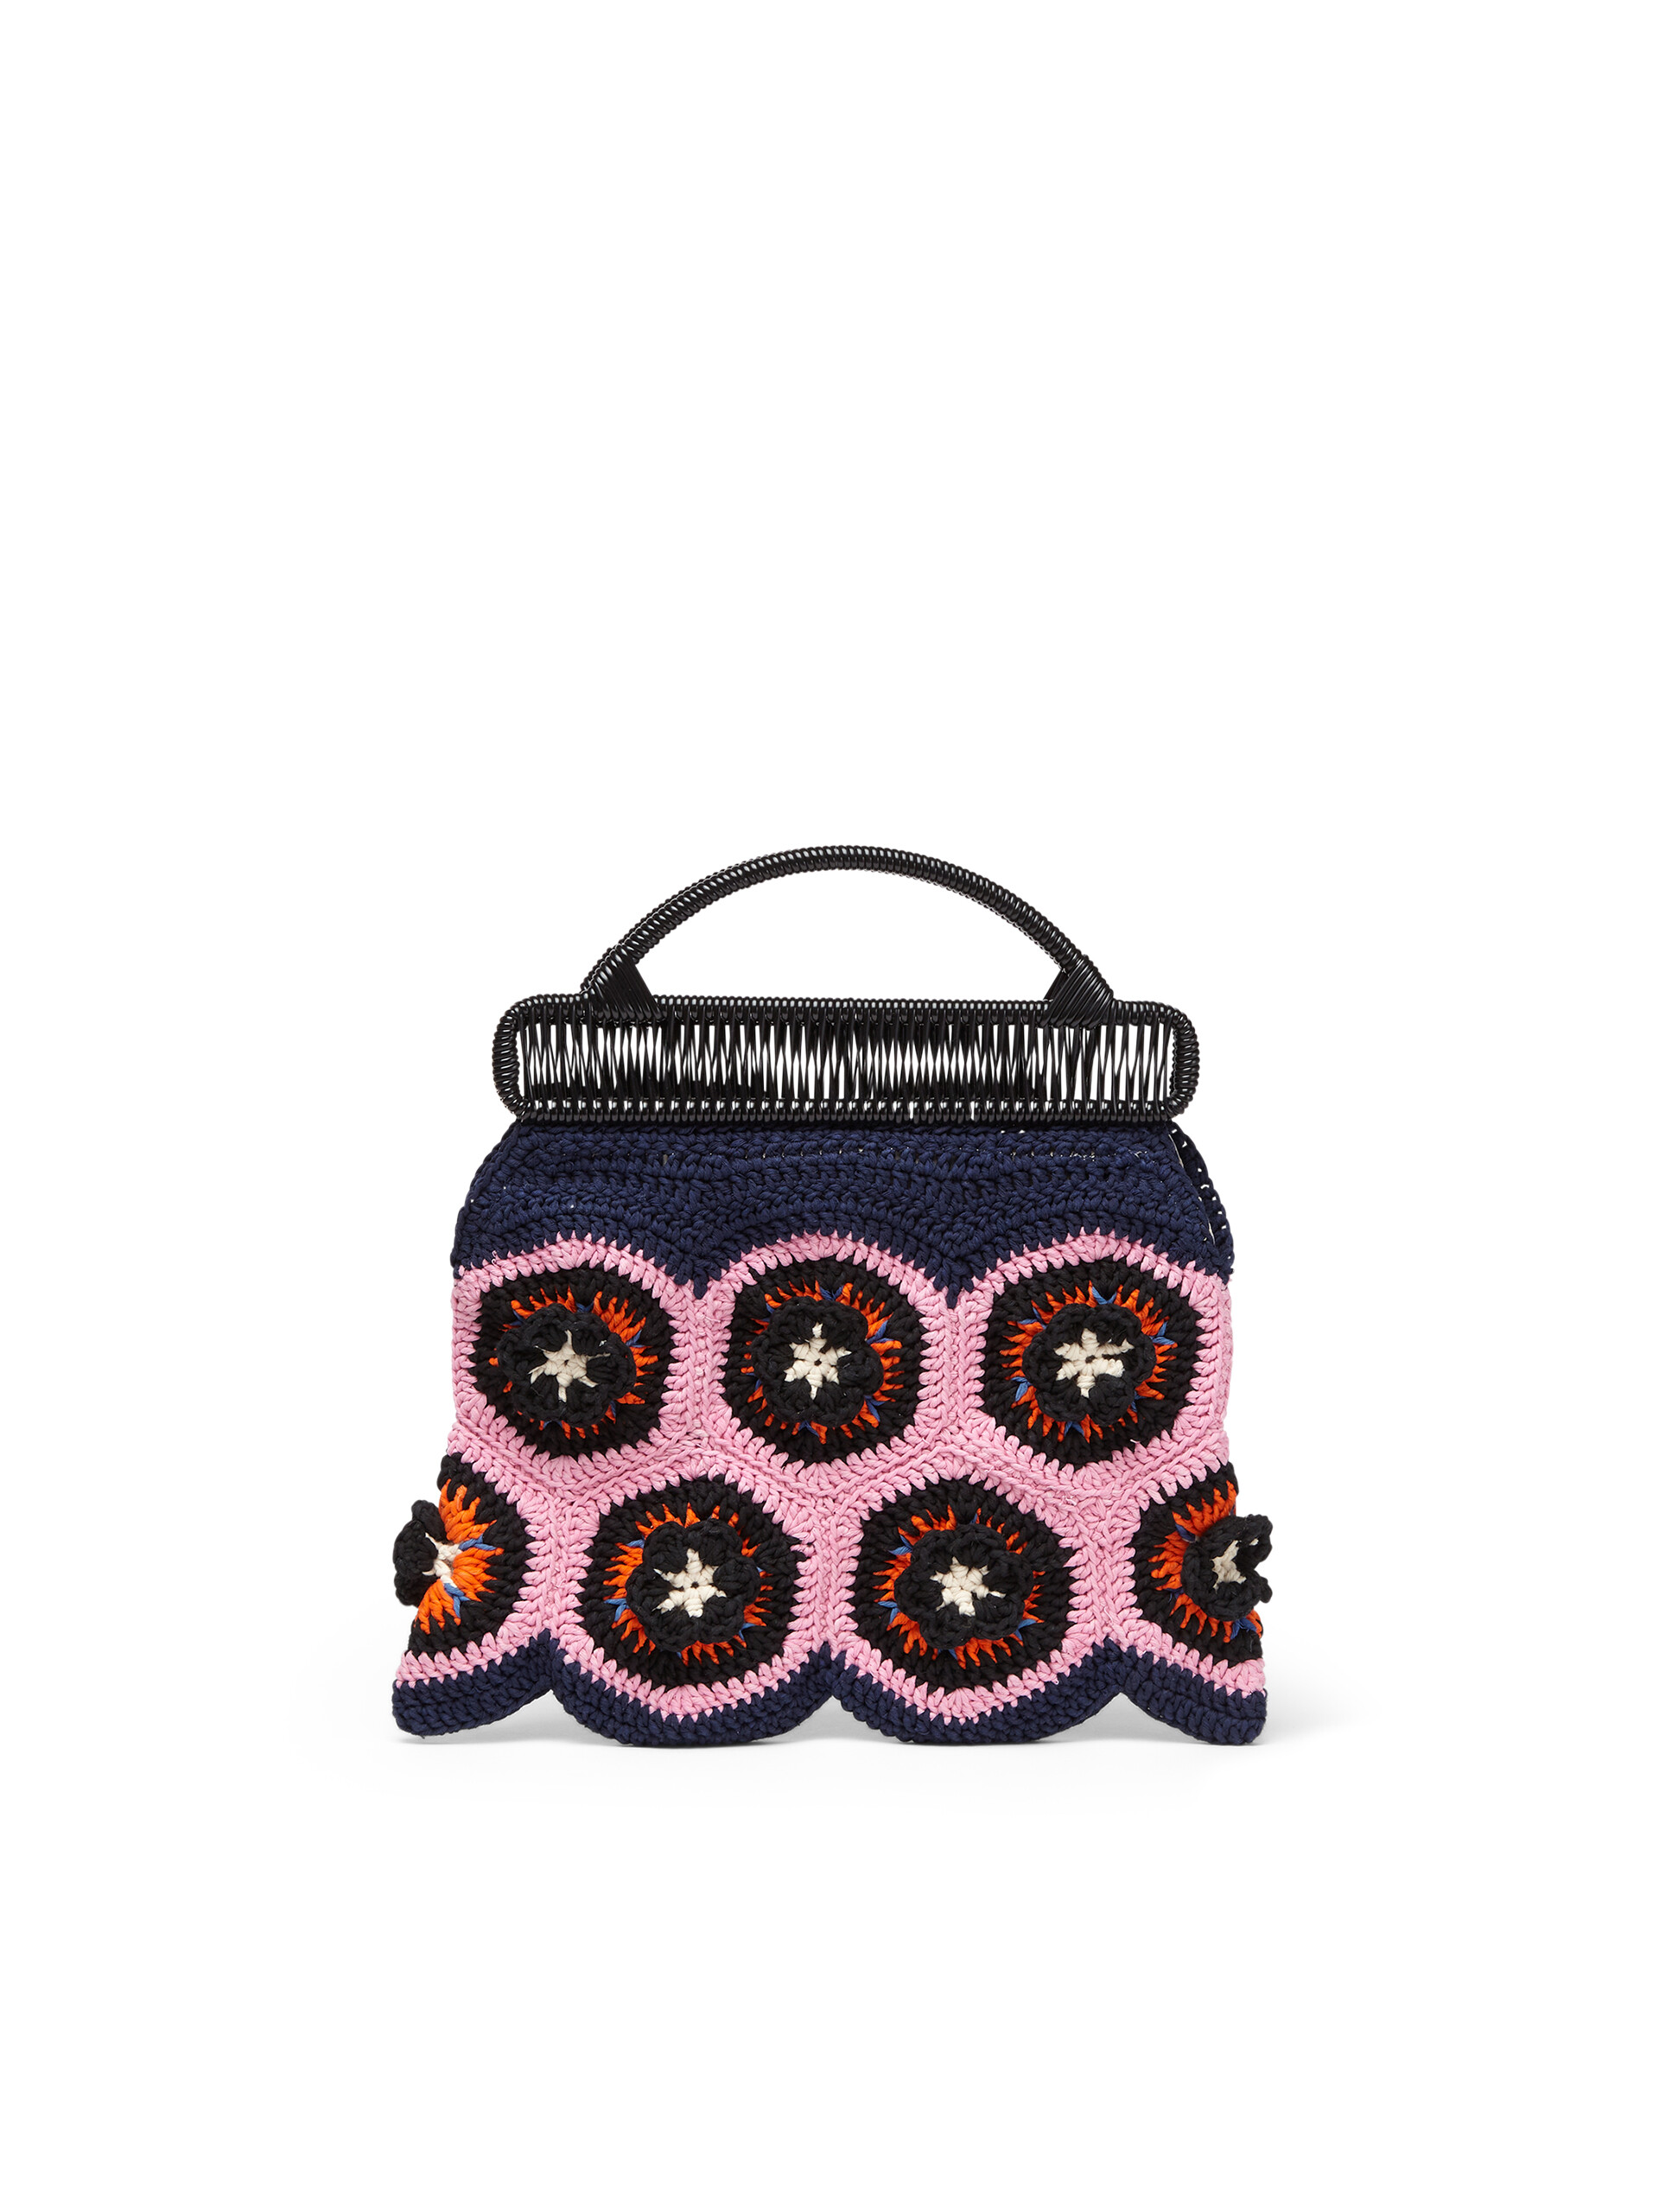 MARNI MARKET frame bag with floral motif in pink and blue crochet cotton blend - Furniture - Image 3